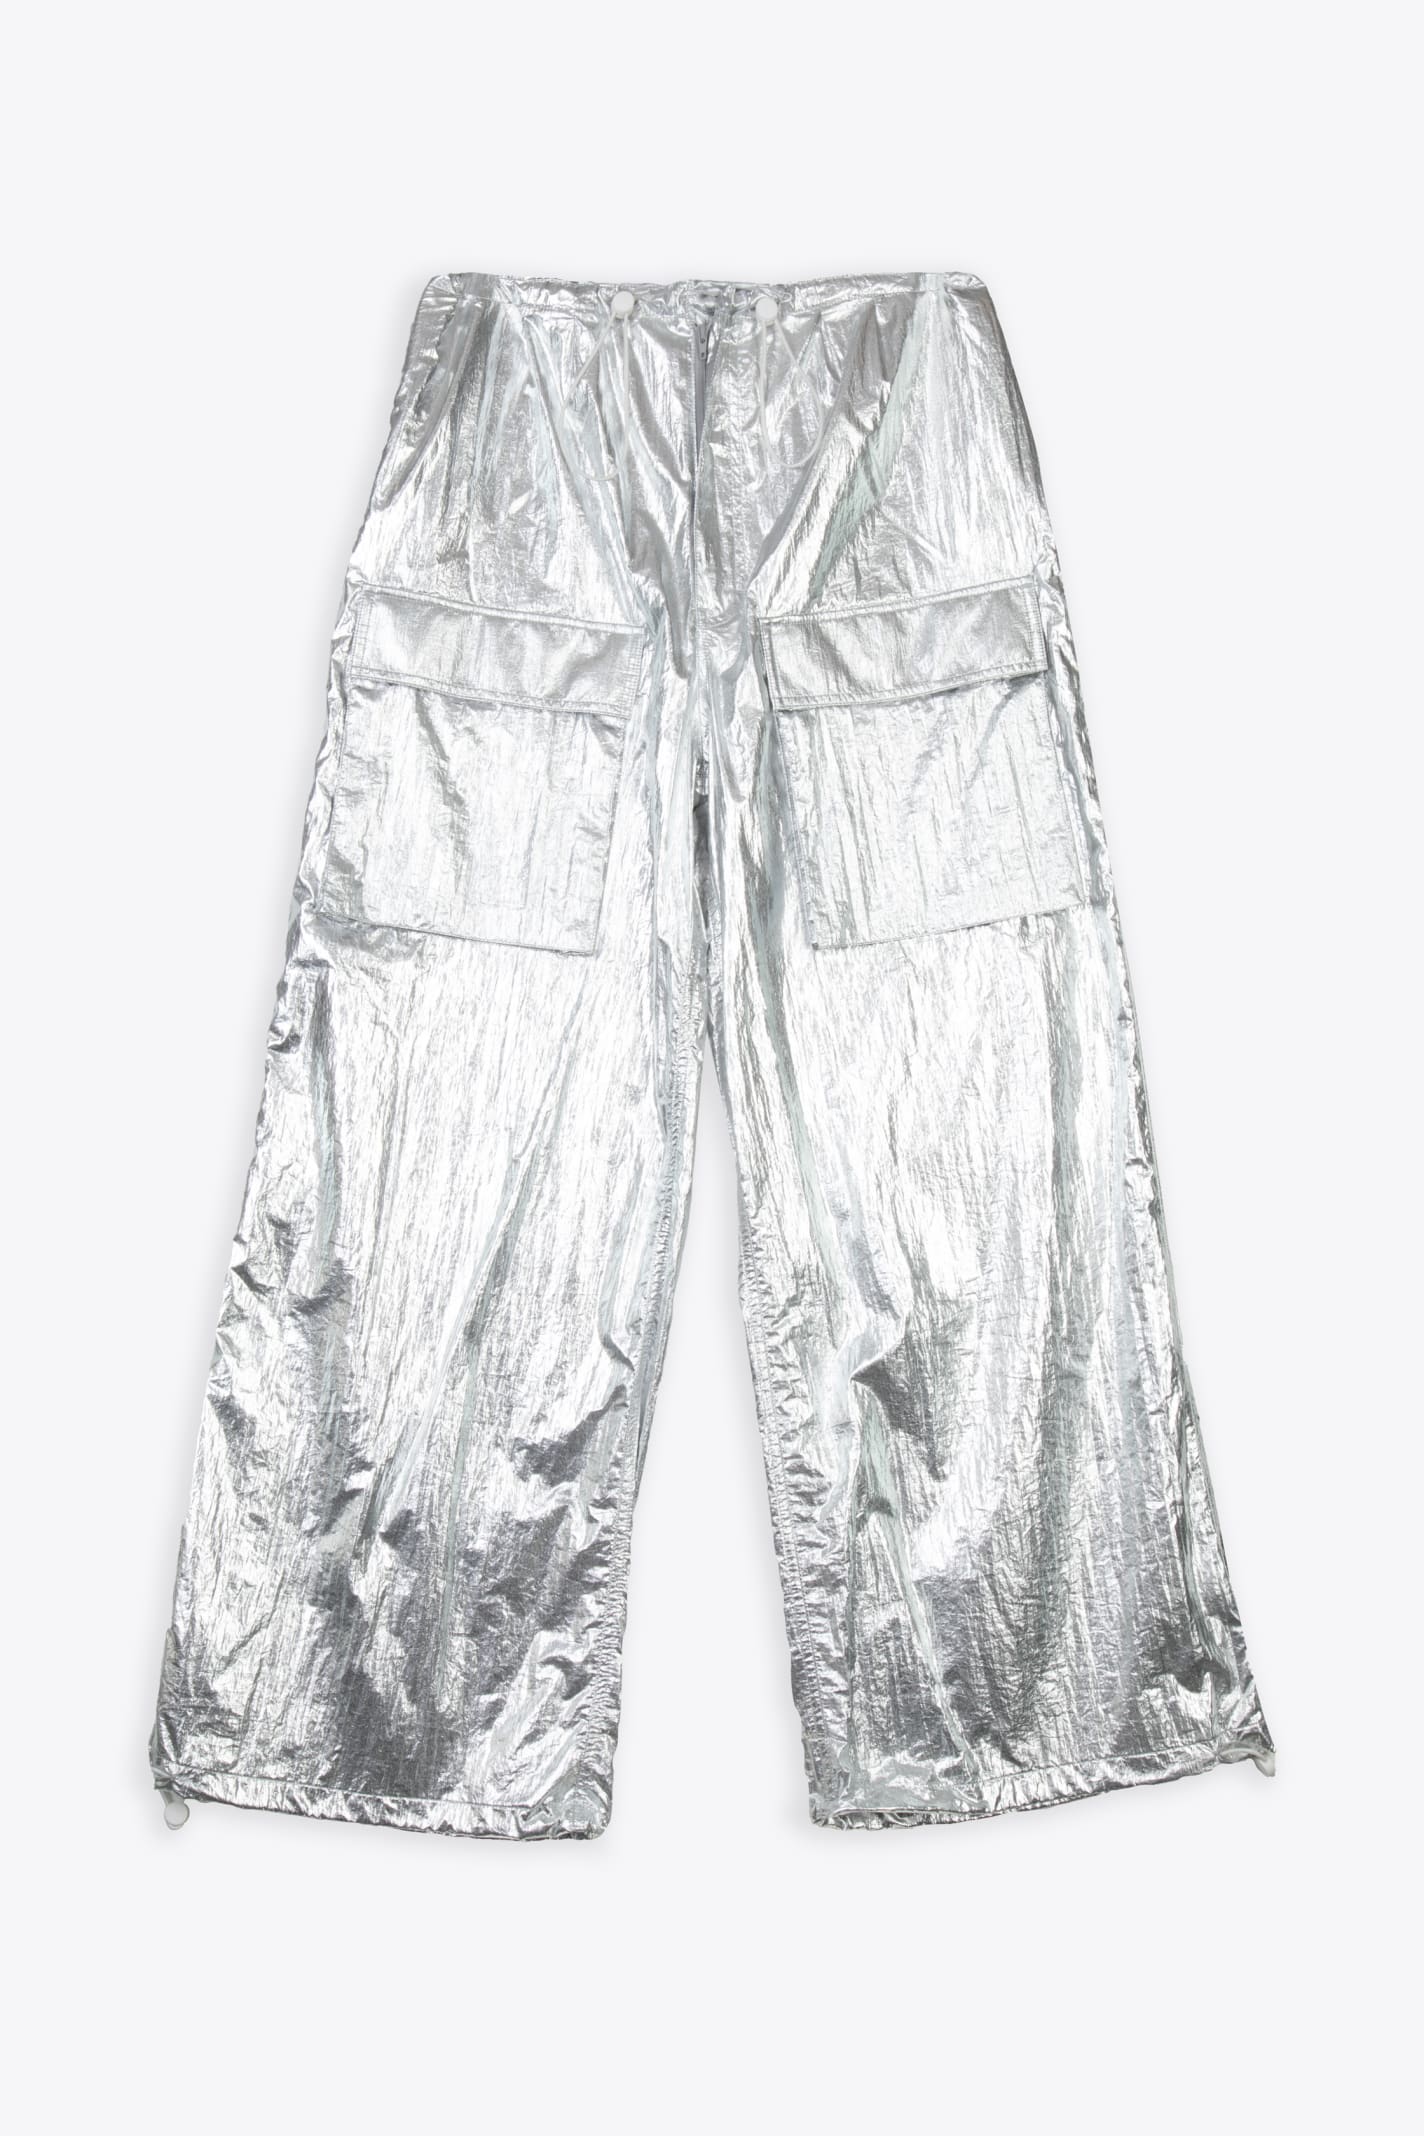 Pantalone Metallic silver nylon parachute cargo pant